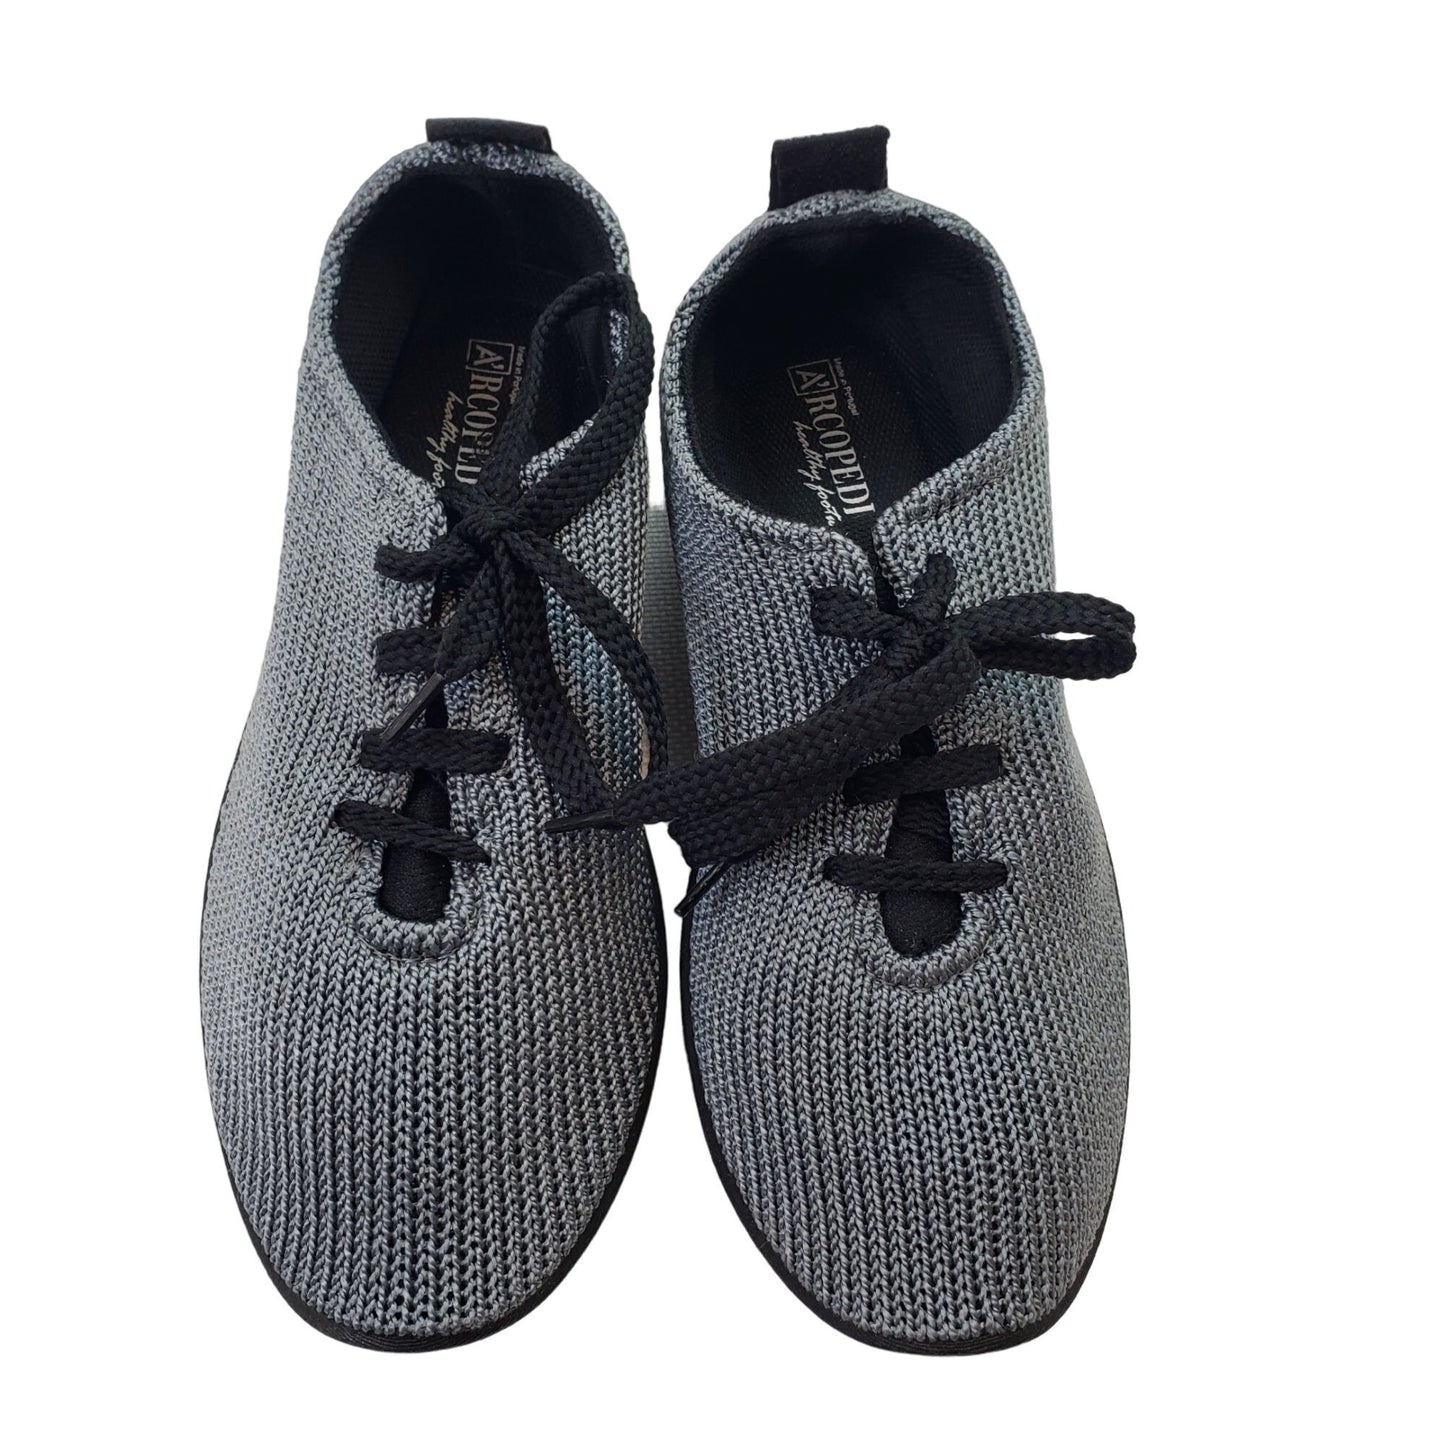 NWOT/NWOB A'rcopedico Knit Comfort Sneakers Size EU 38/US 7-7.5